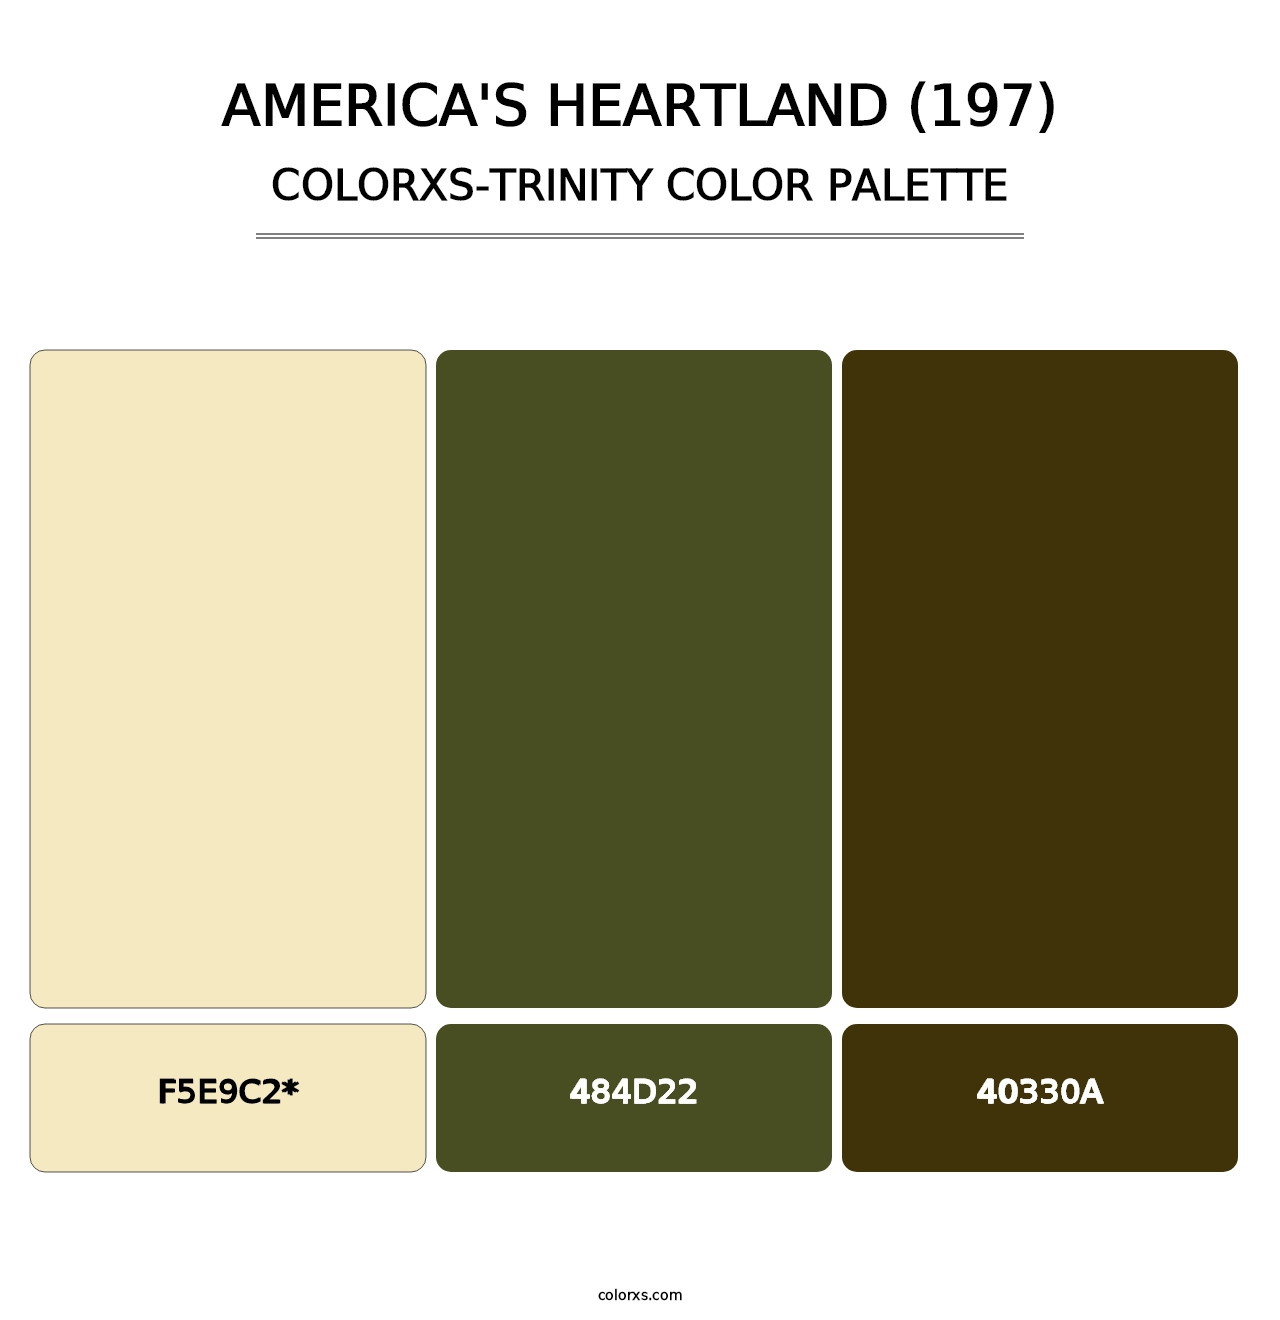 America's Heartland (197) - Colorxs Trinity Palette